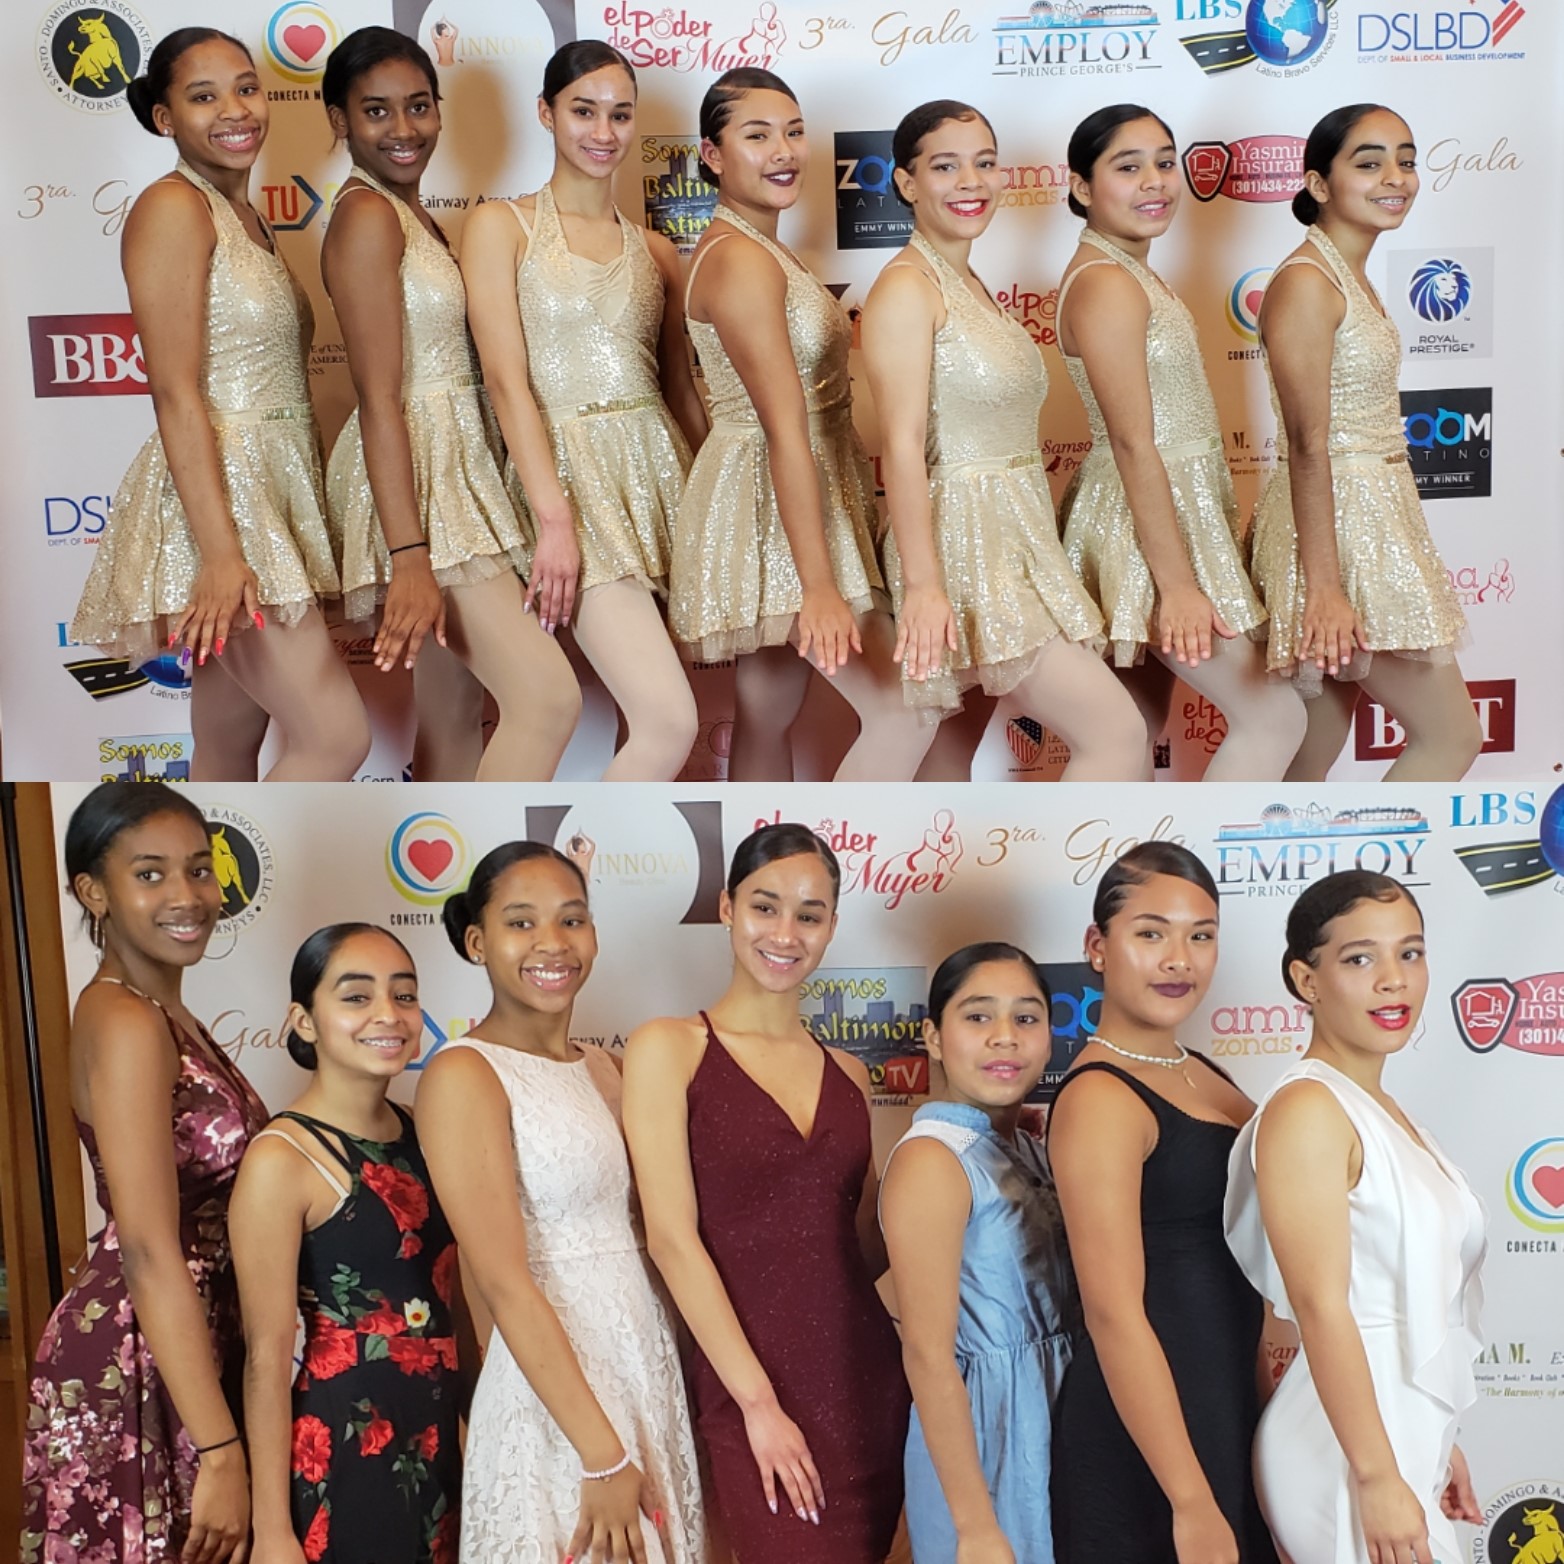 New Hope dance company teens pose at the Gala "El Poder de Ser Mujer".